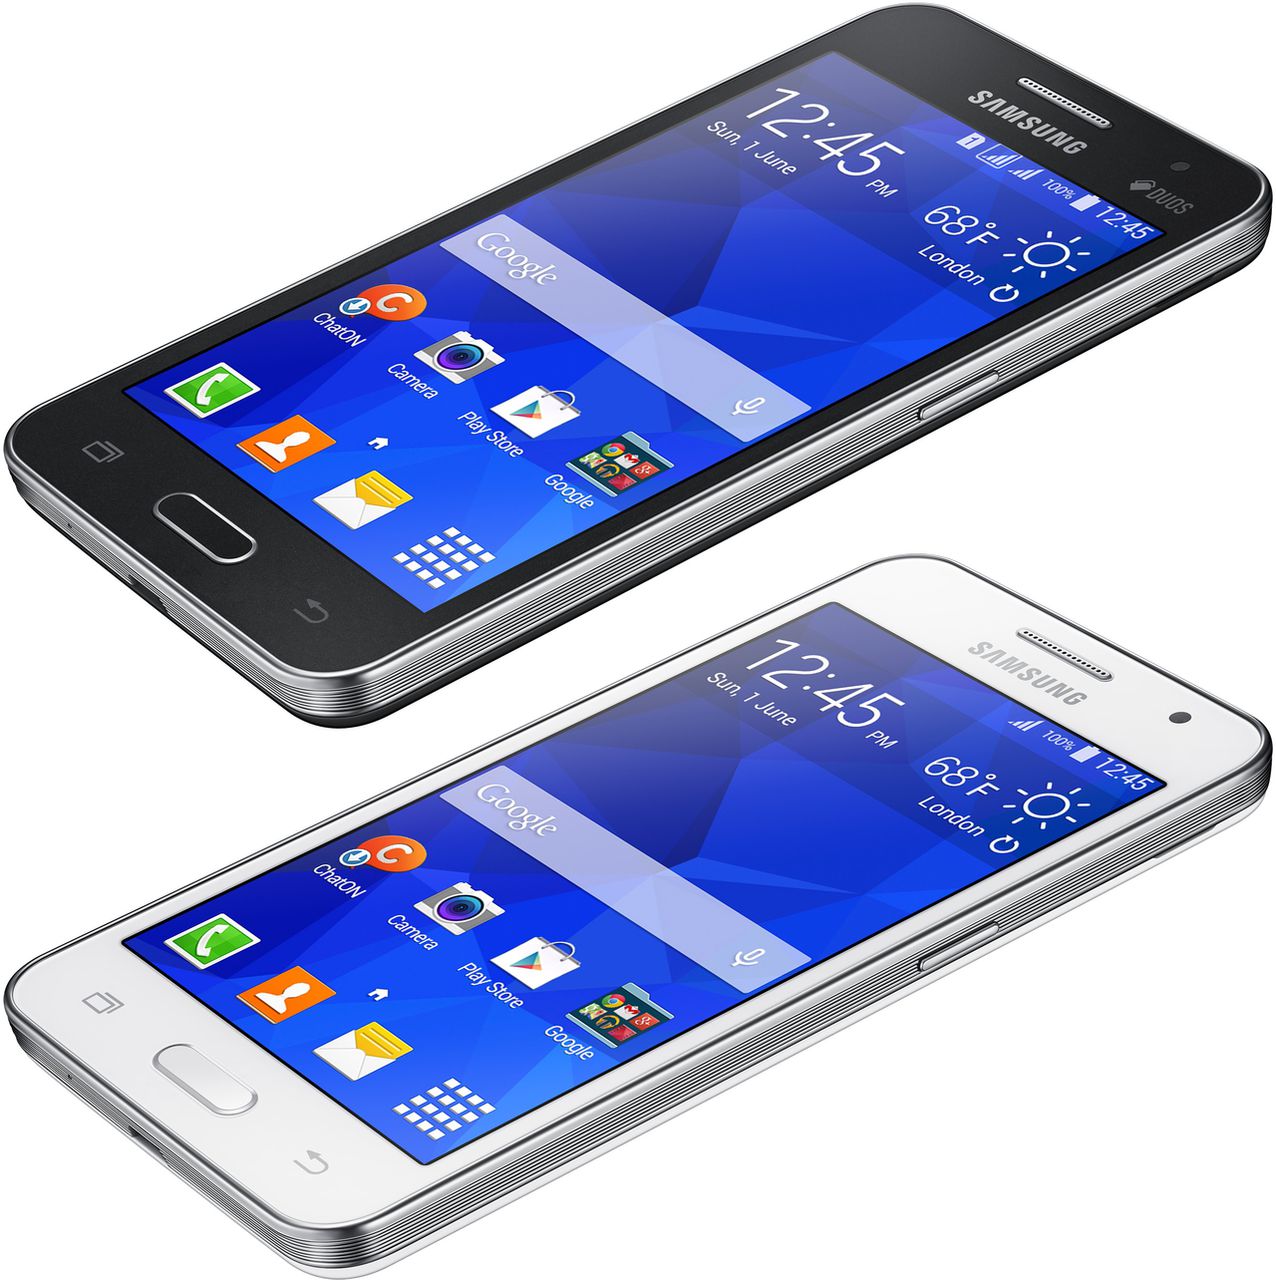 Samsung Galaxy Минск